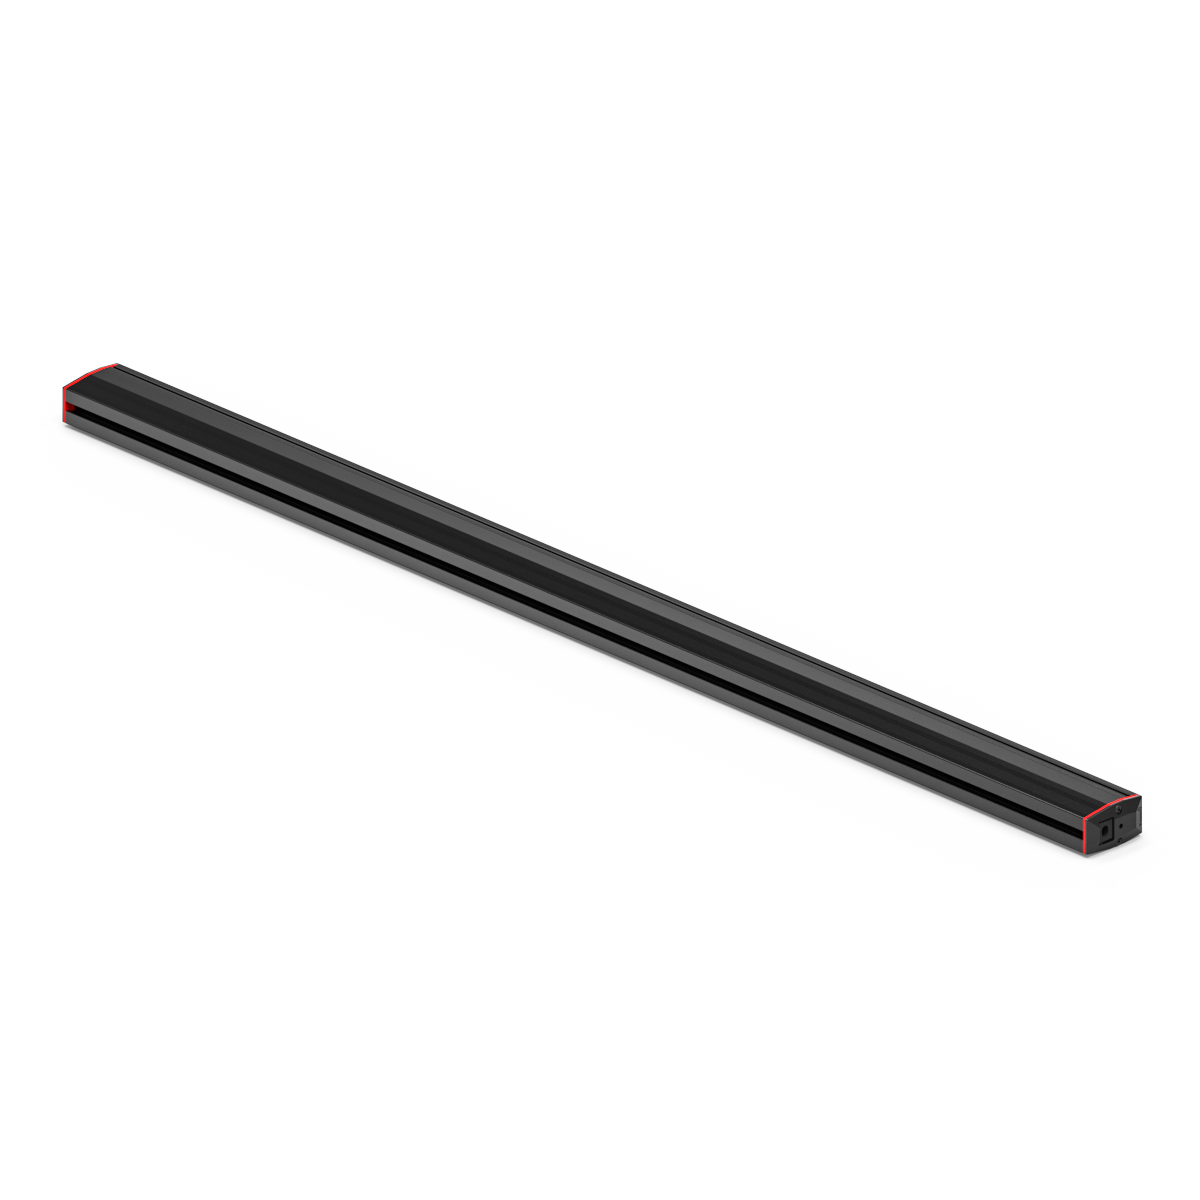 Feniex Fusion-S 800 Light Stick